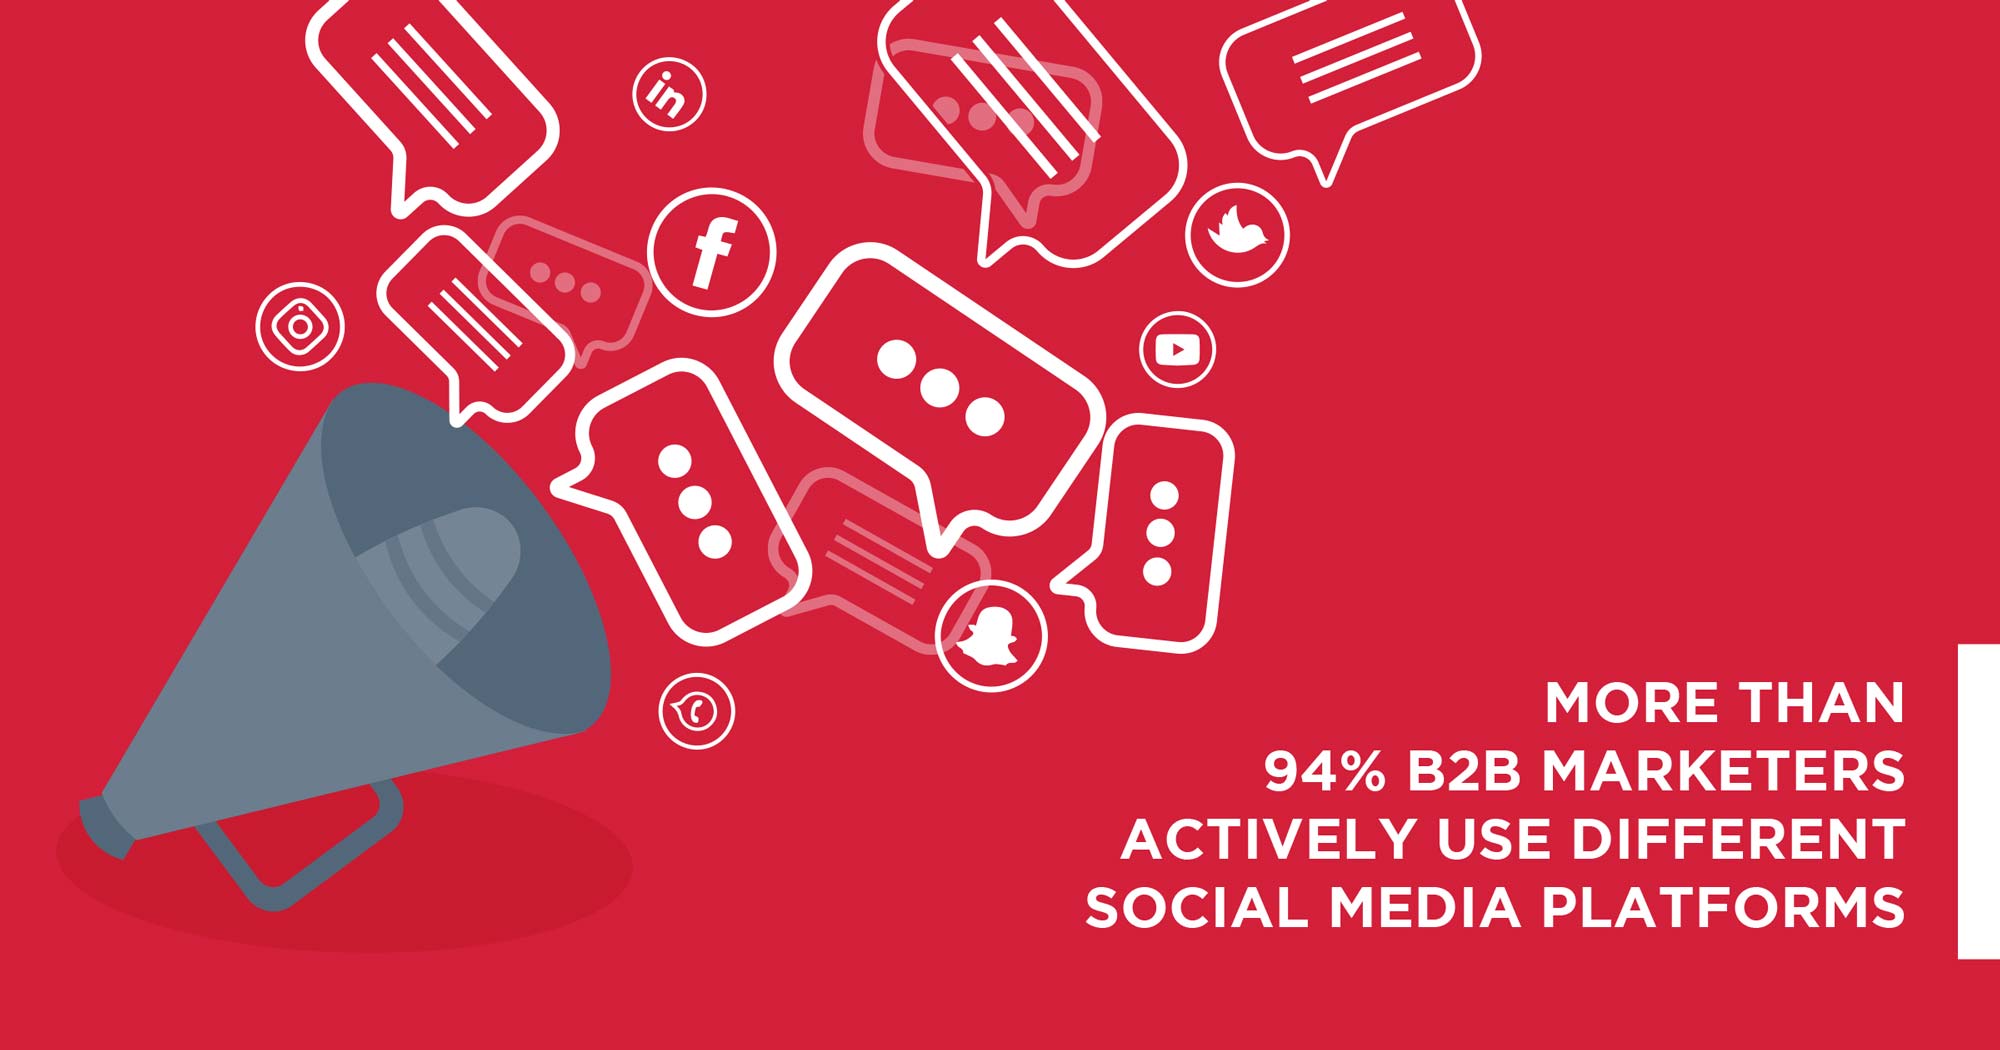 Make Use of Social Media Platforms